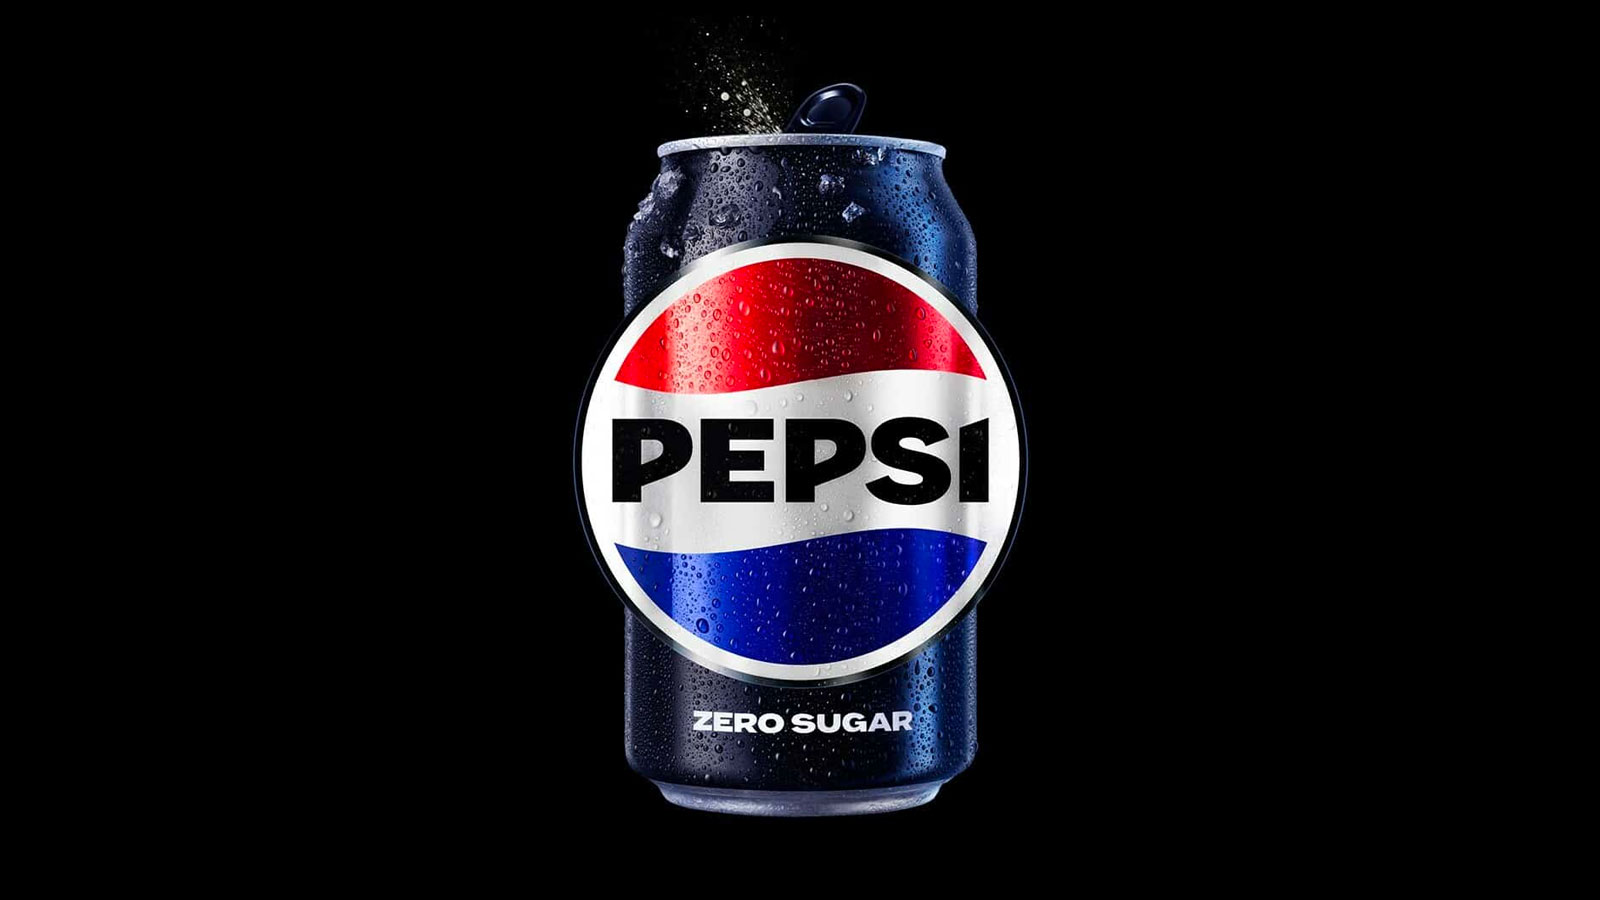 Pepsi apresenta nova identidade visual